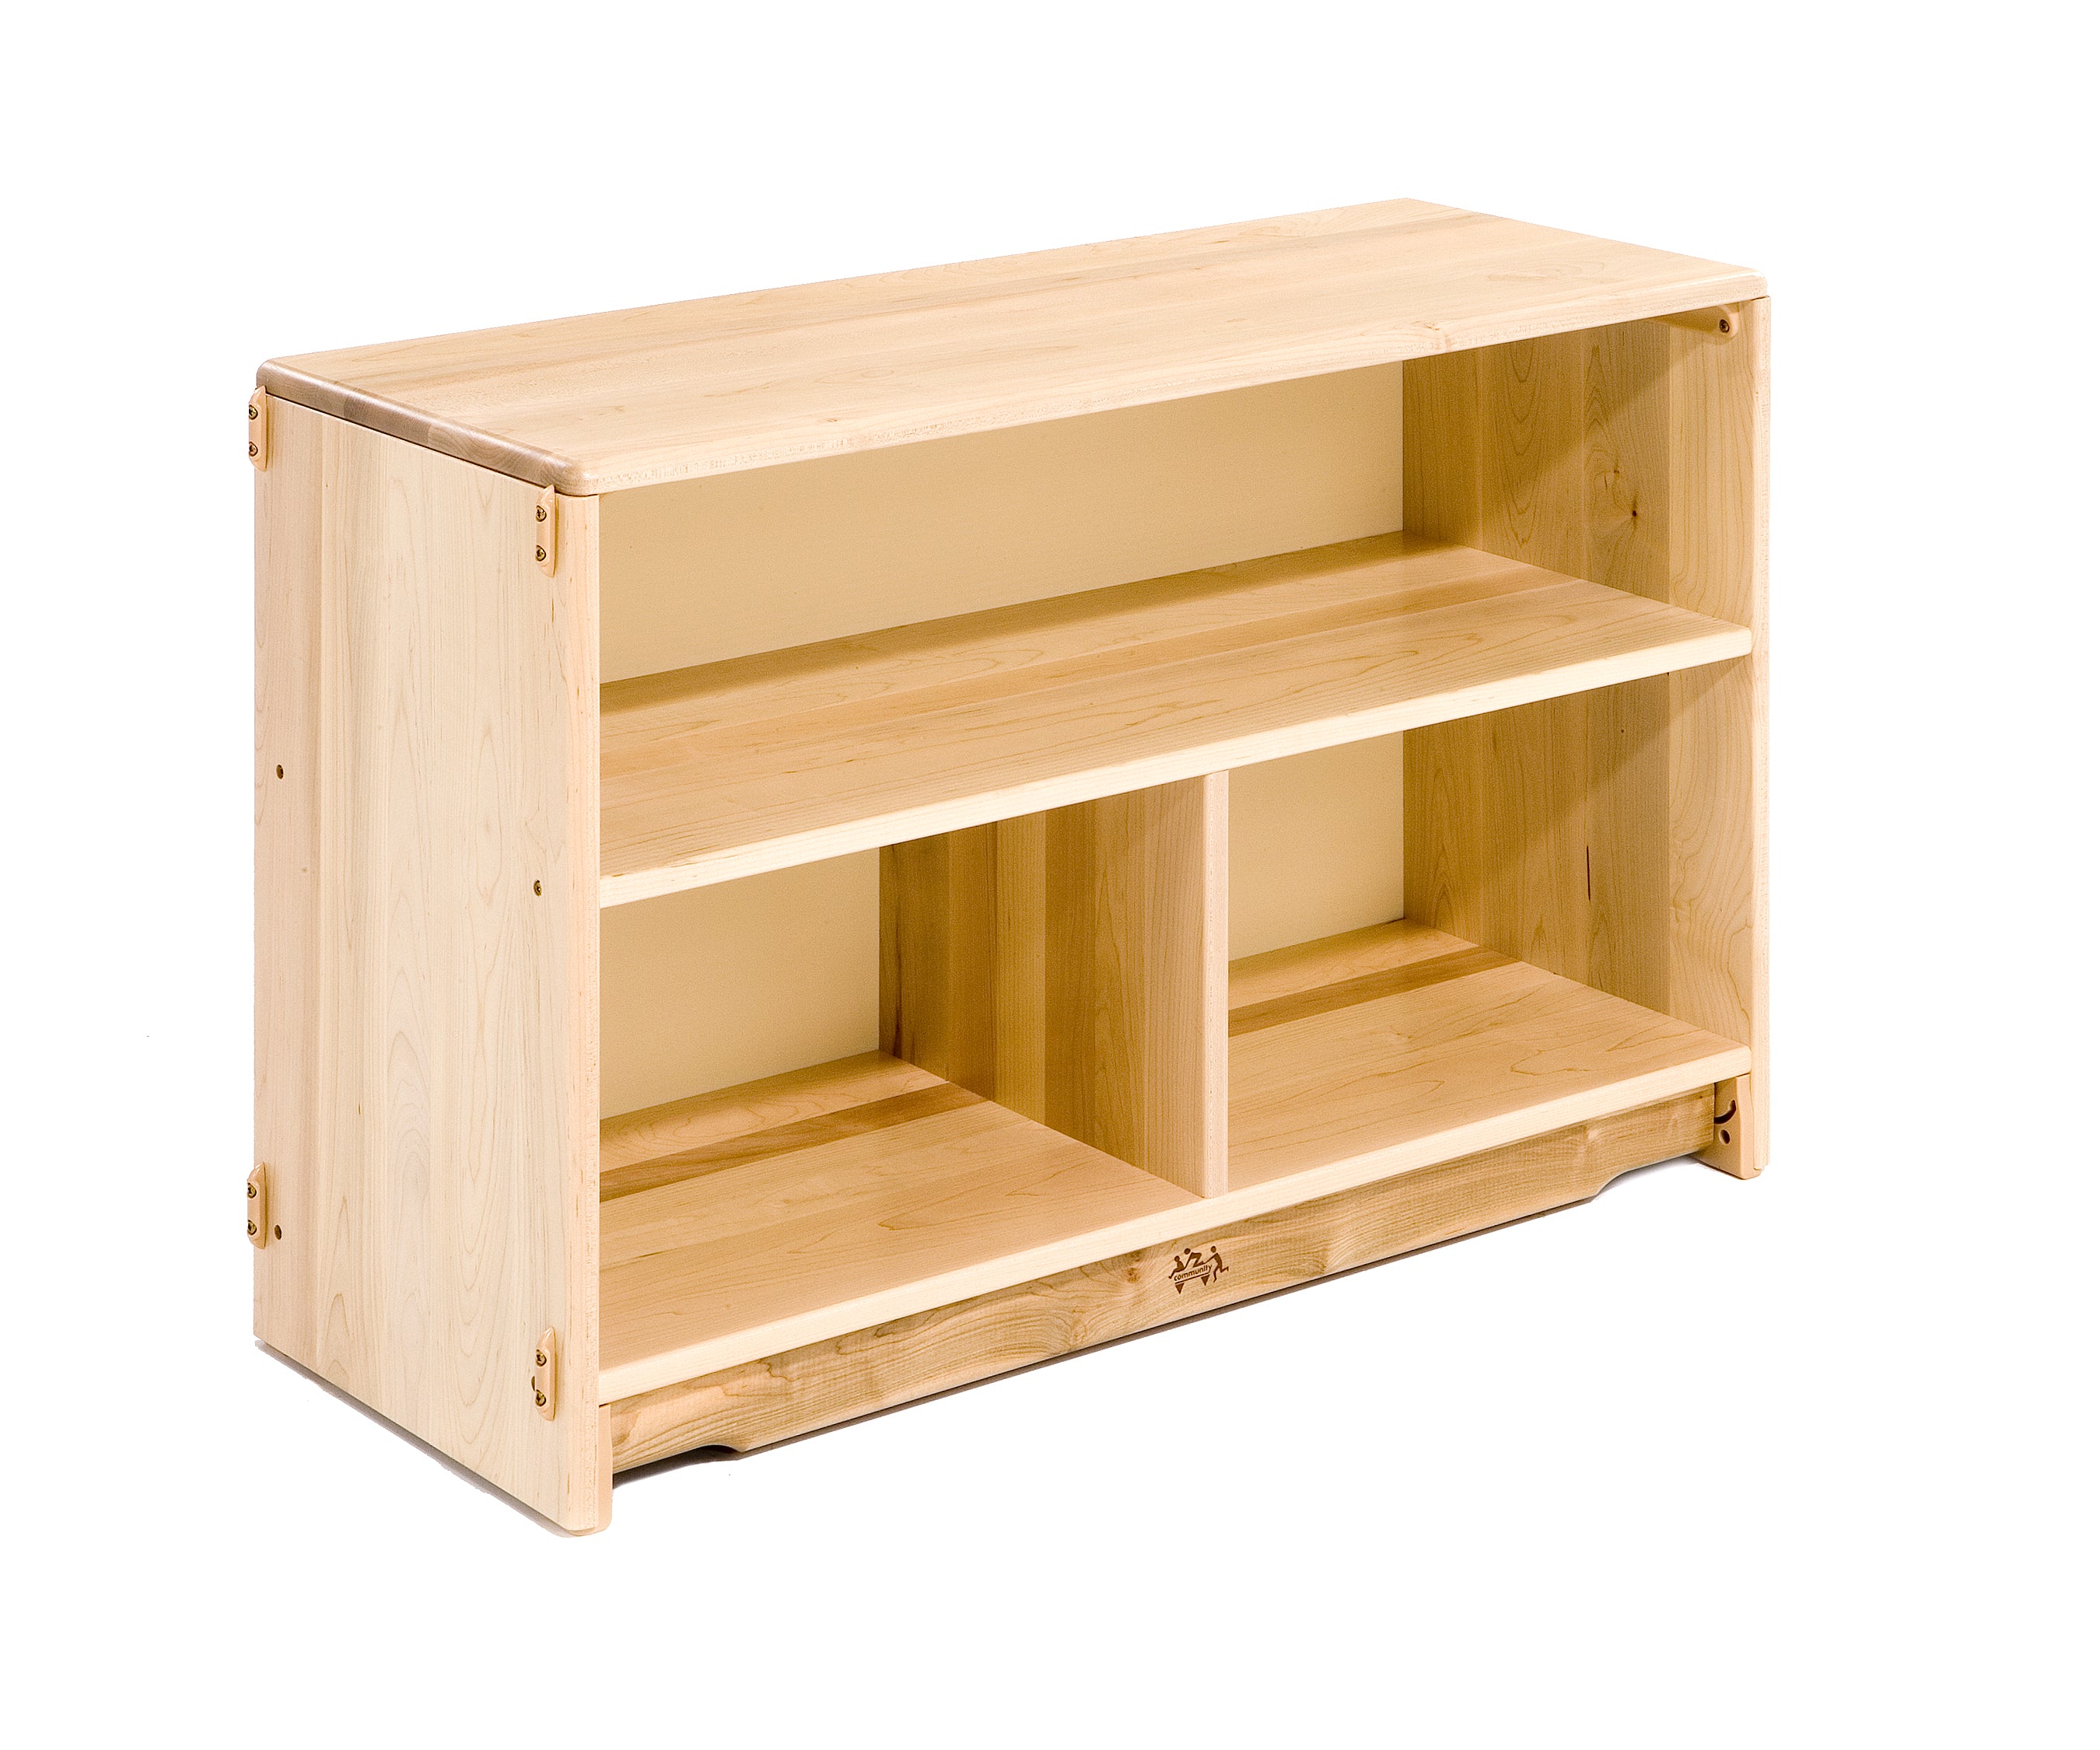 Fixed Shelf 3' x 24" by Community Playthings - louisekool